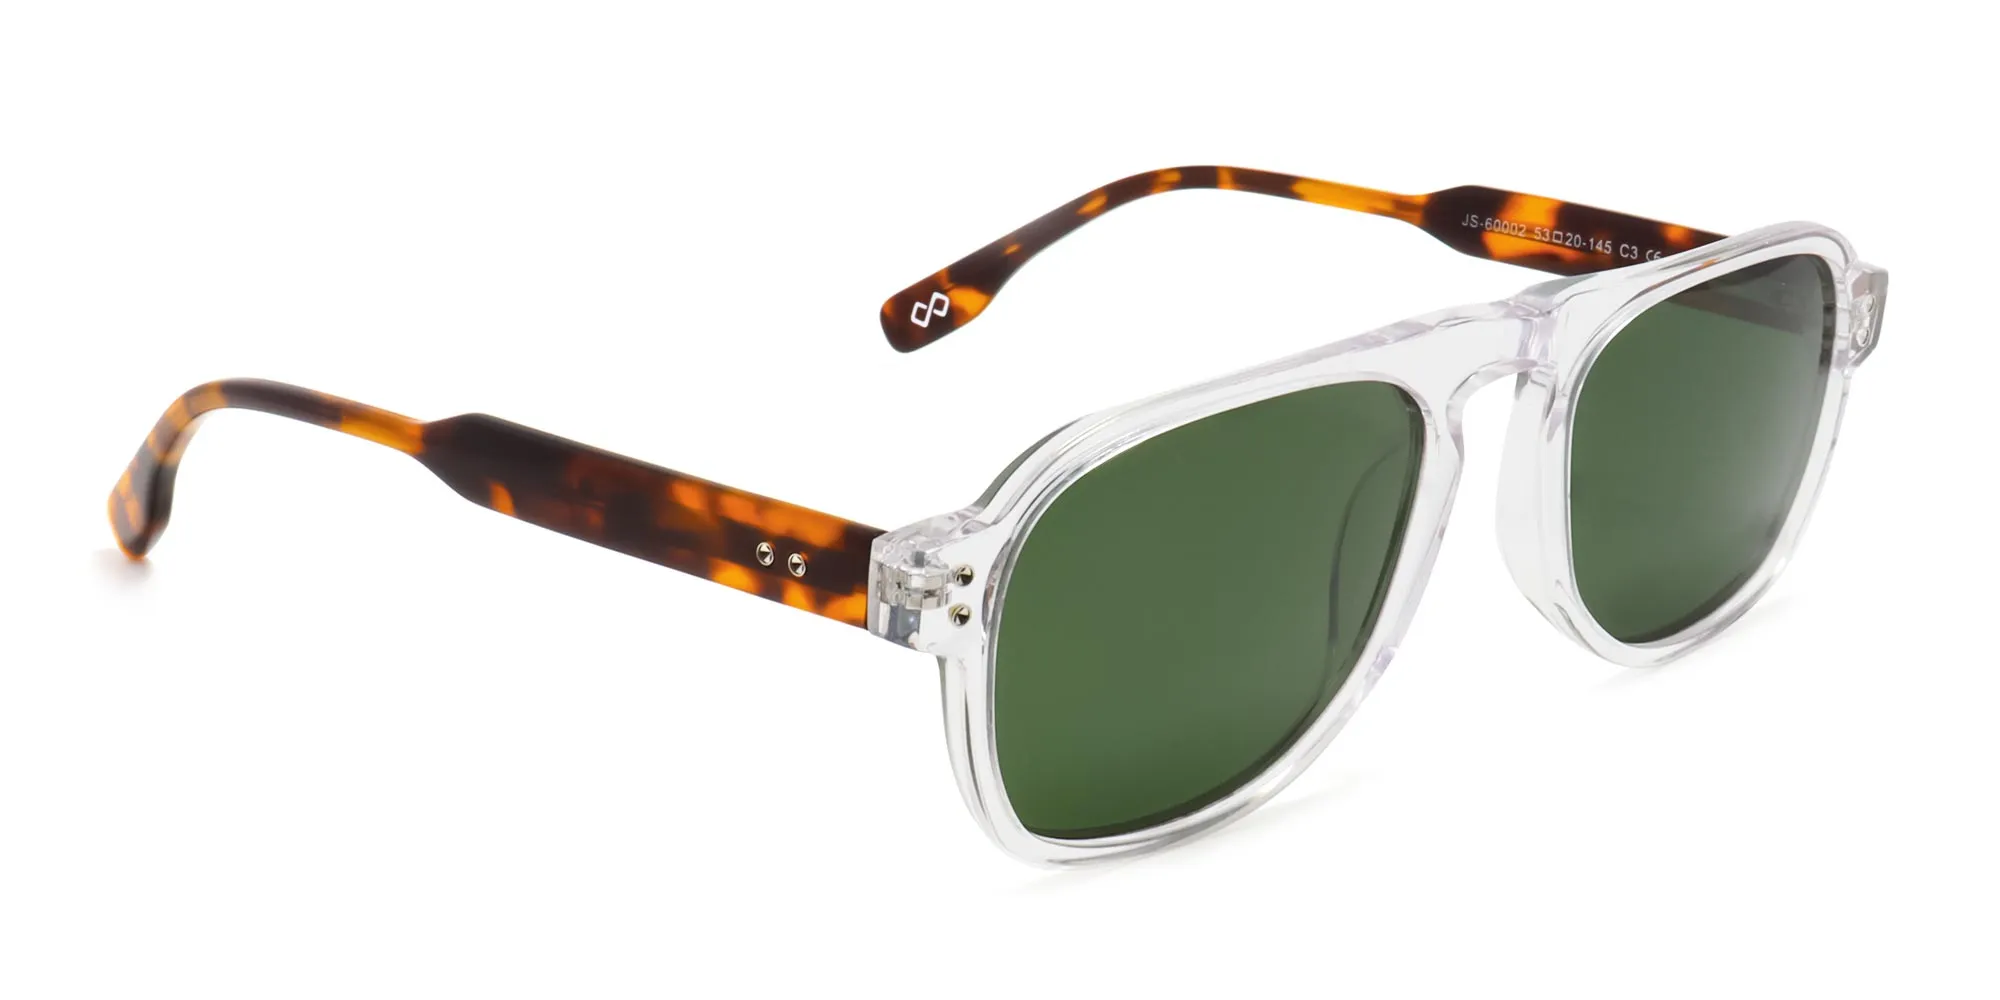 Green Tortoise Shell Sunglasses-2